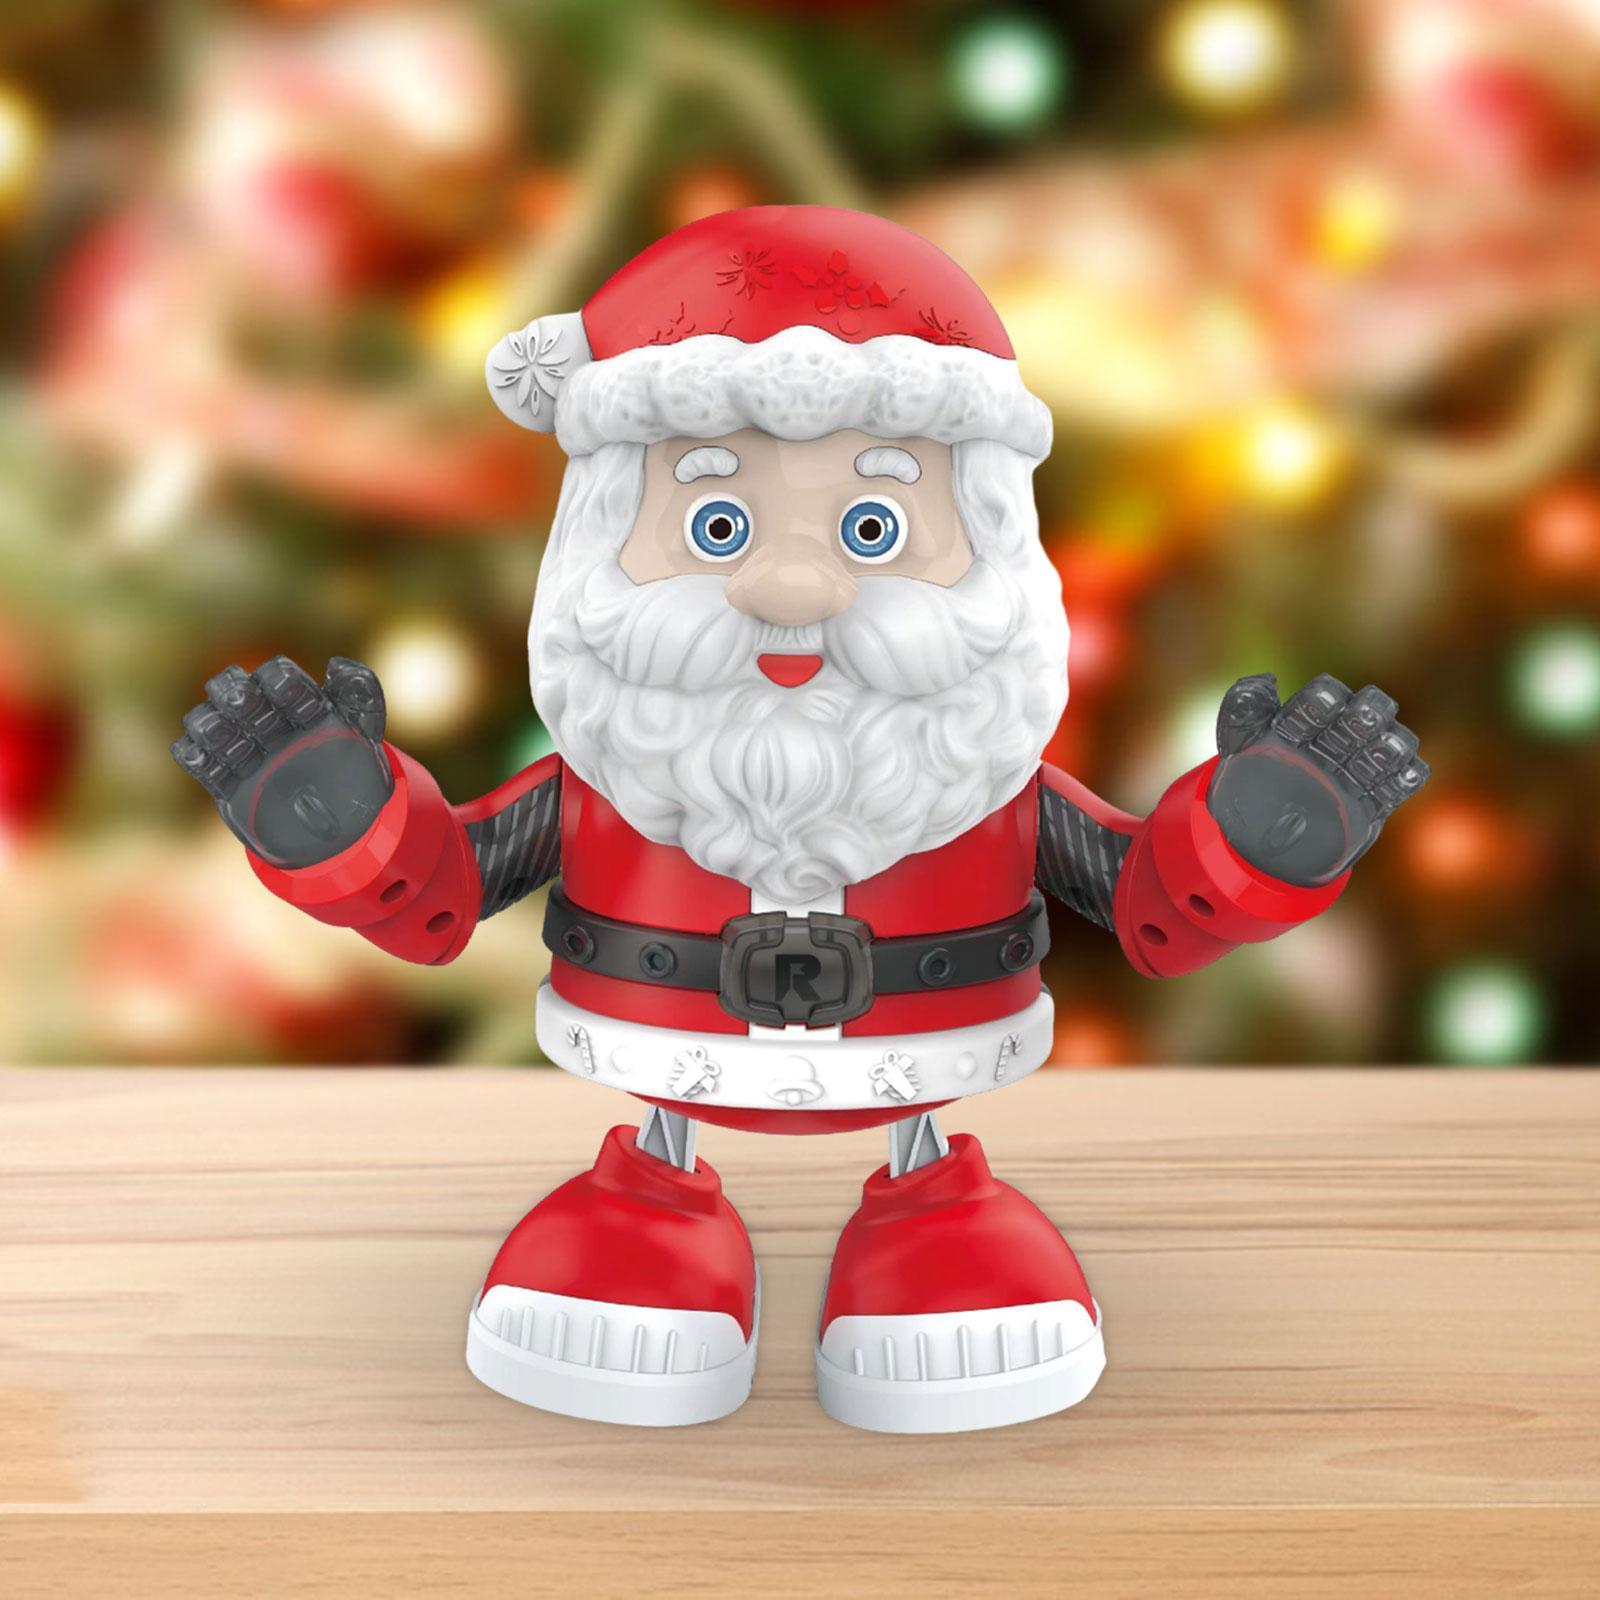 Singing Dancing Santa Claus Electric Santa Claus Toy for Xmas Party Tabletop